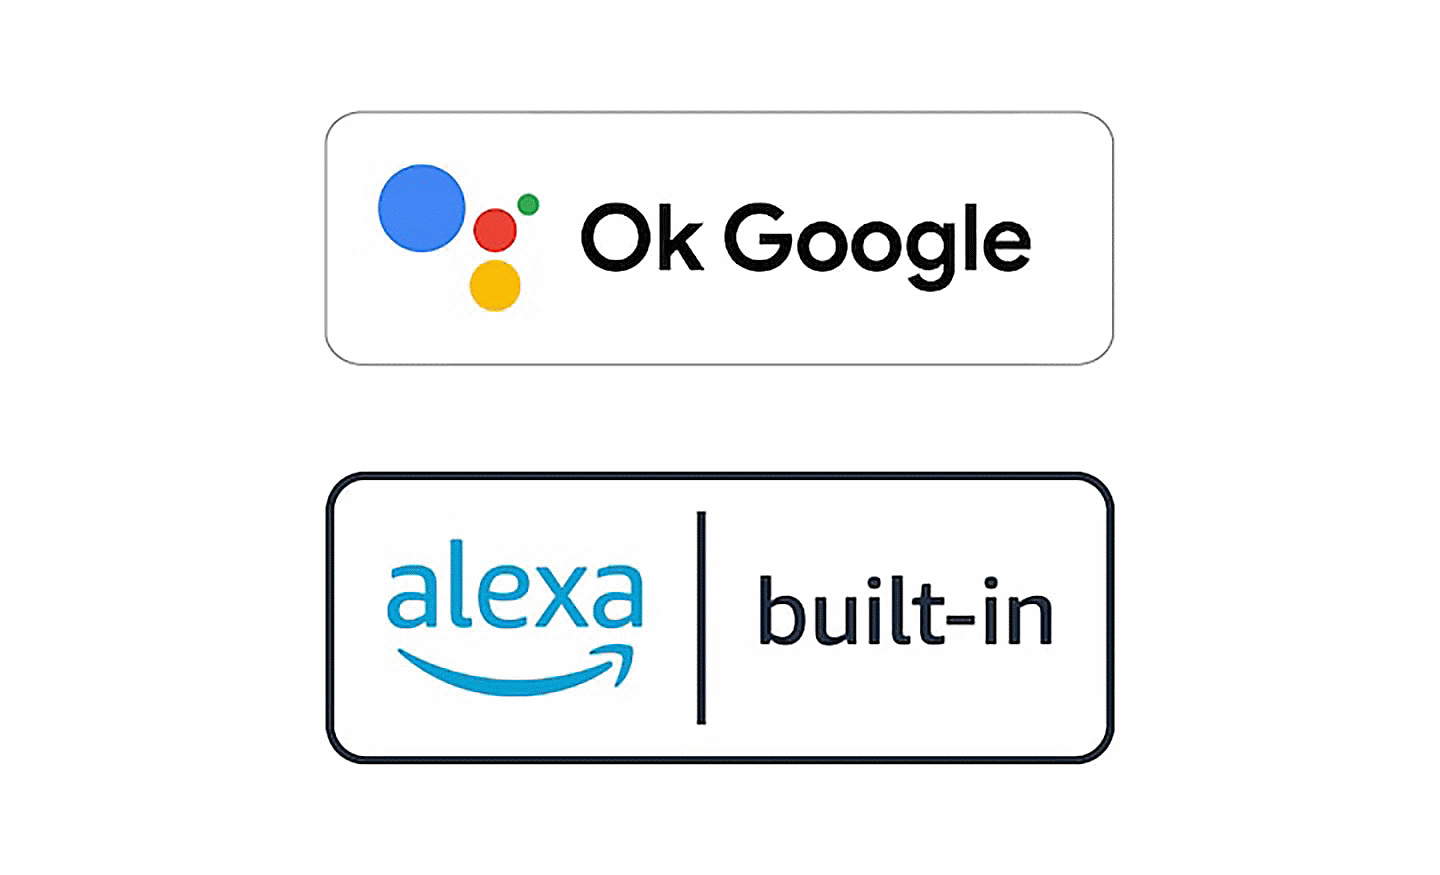 Image of an Ok Google logo and an alexa built-in logo